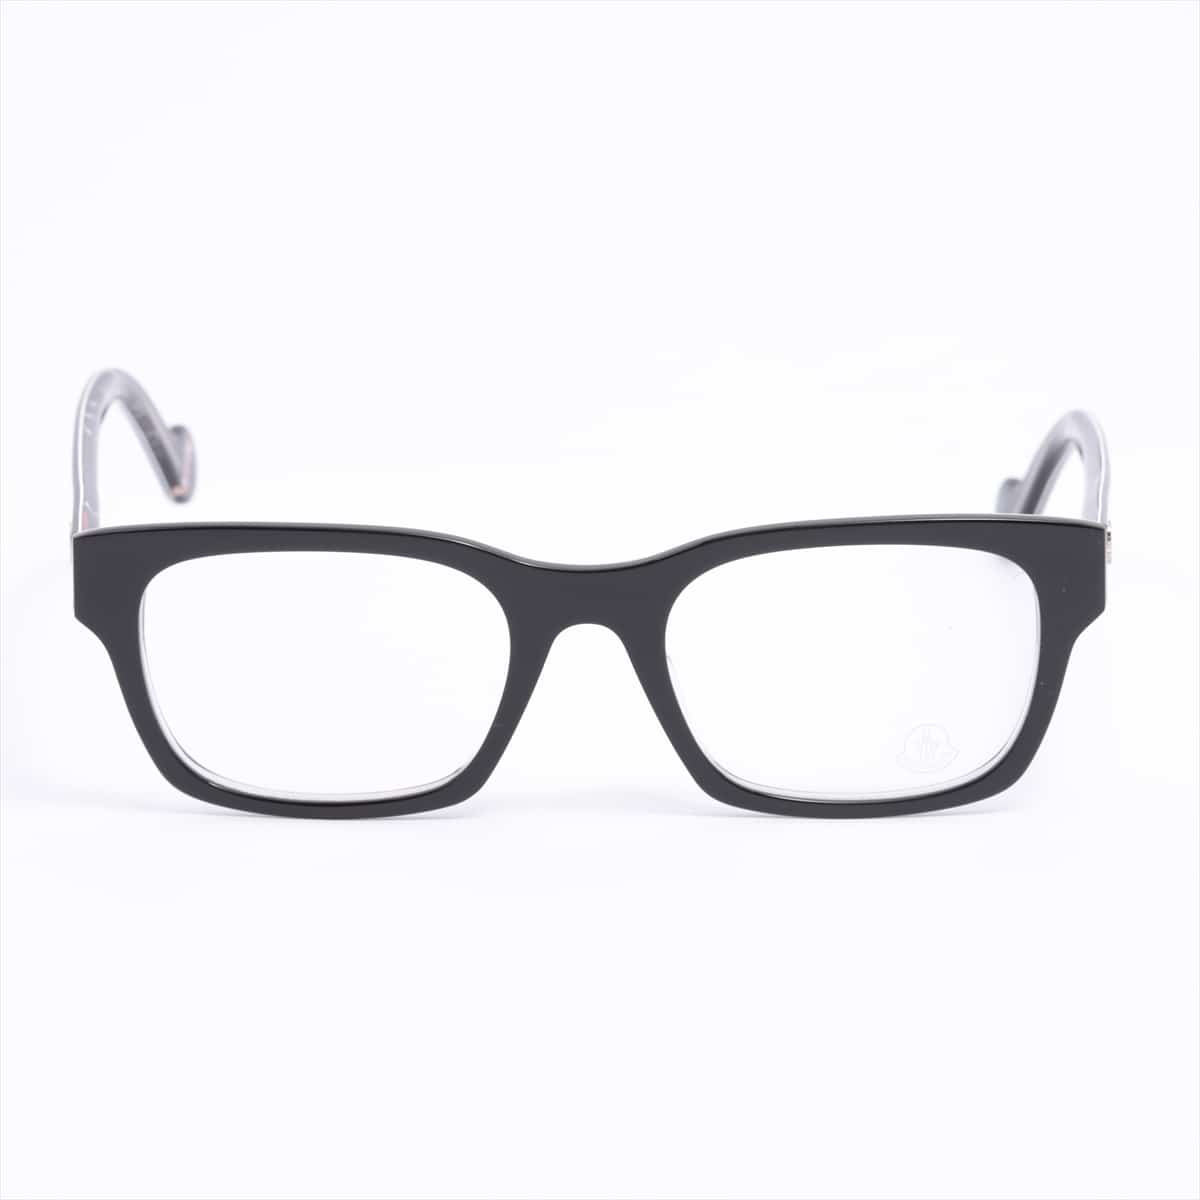 Moncler Glasses Plastic